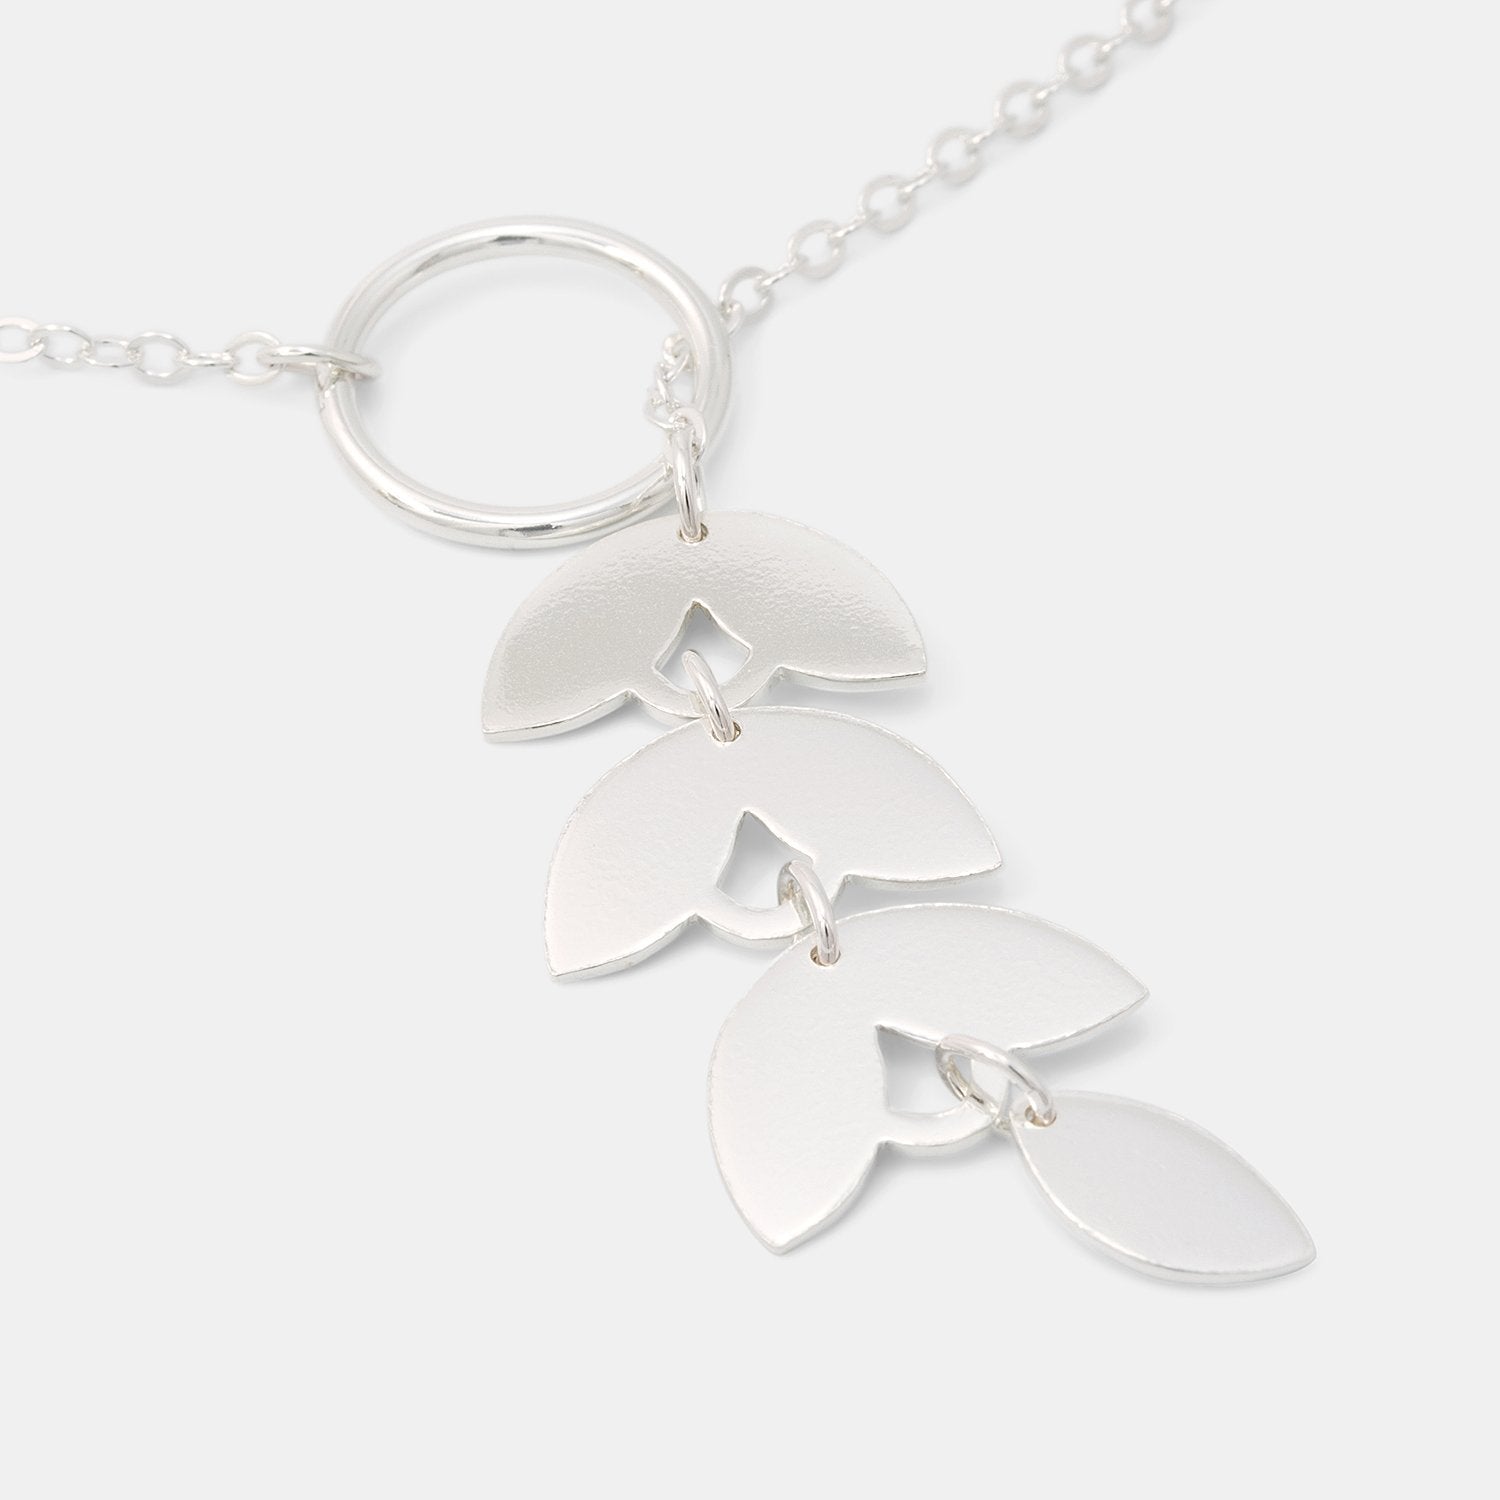 Leaves lariat necklace - Simone Walsh Jewellery Australia